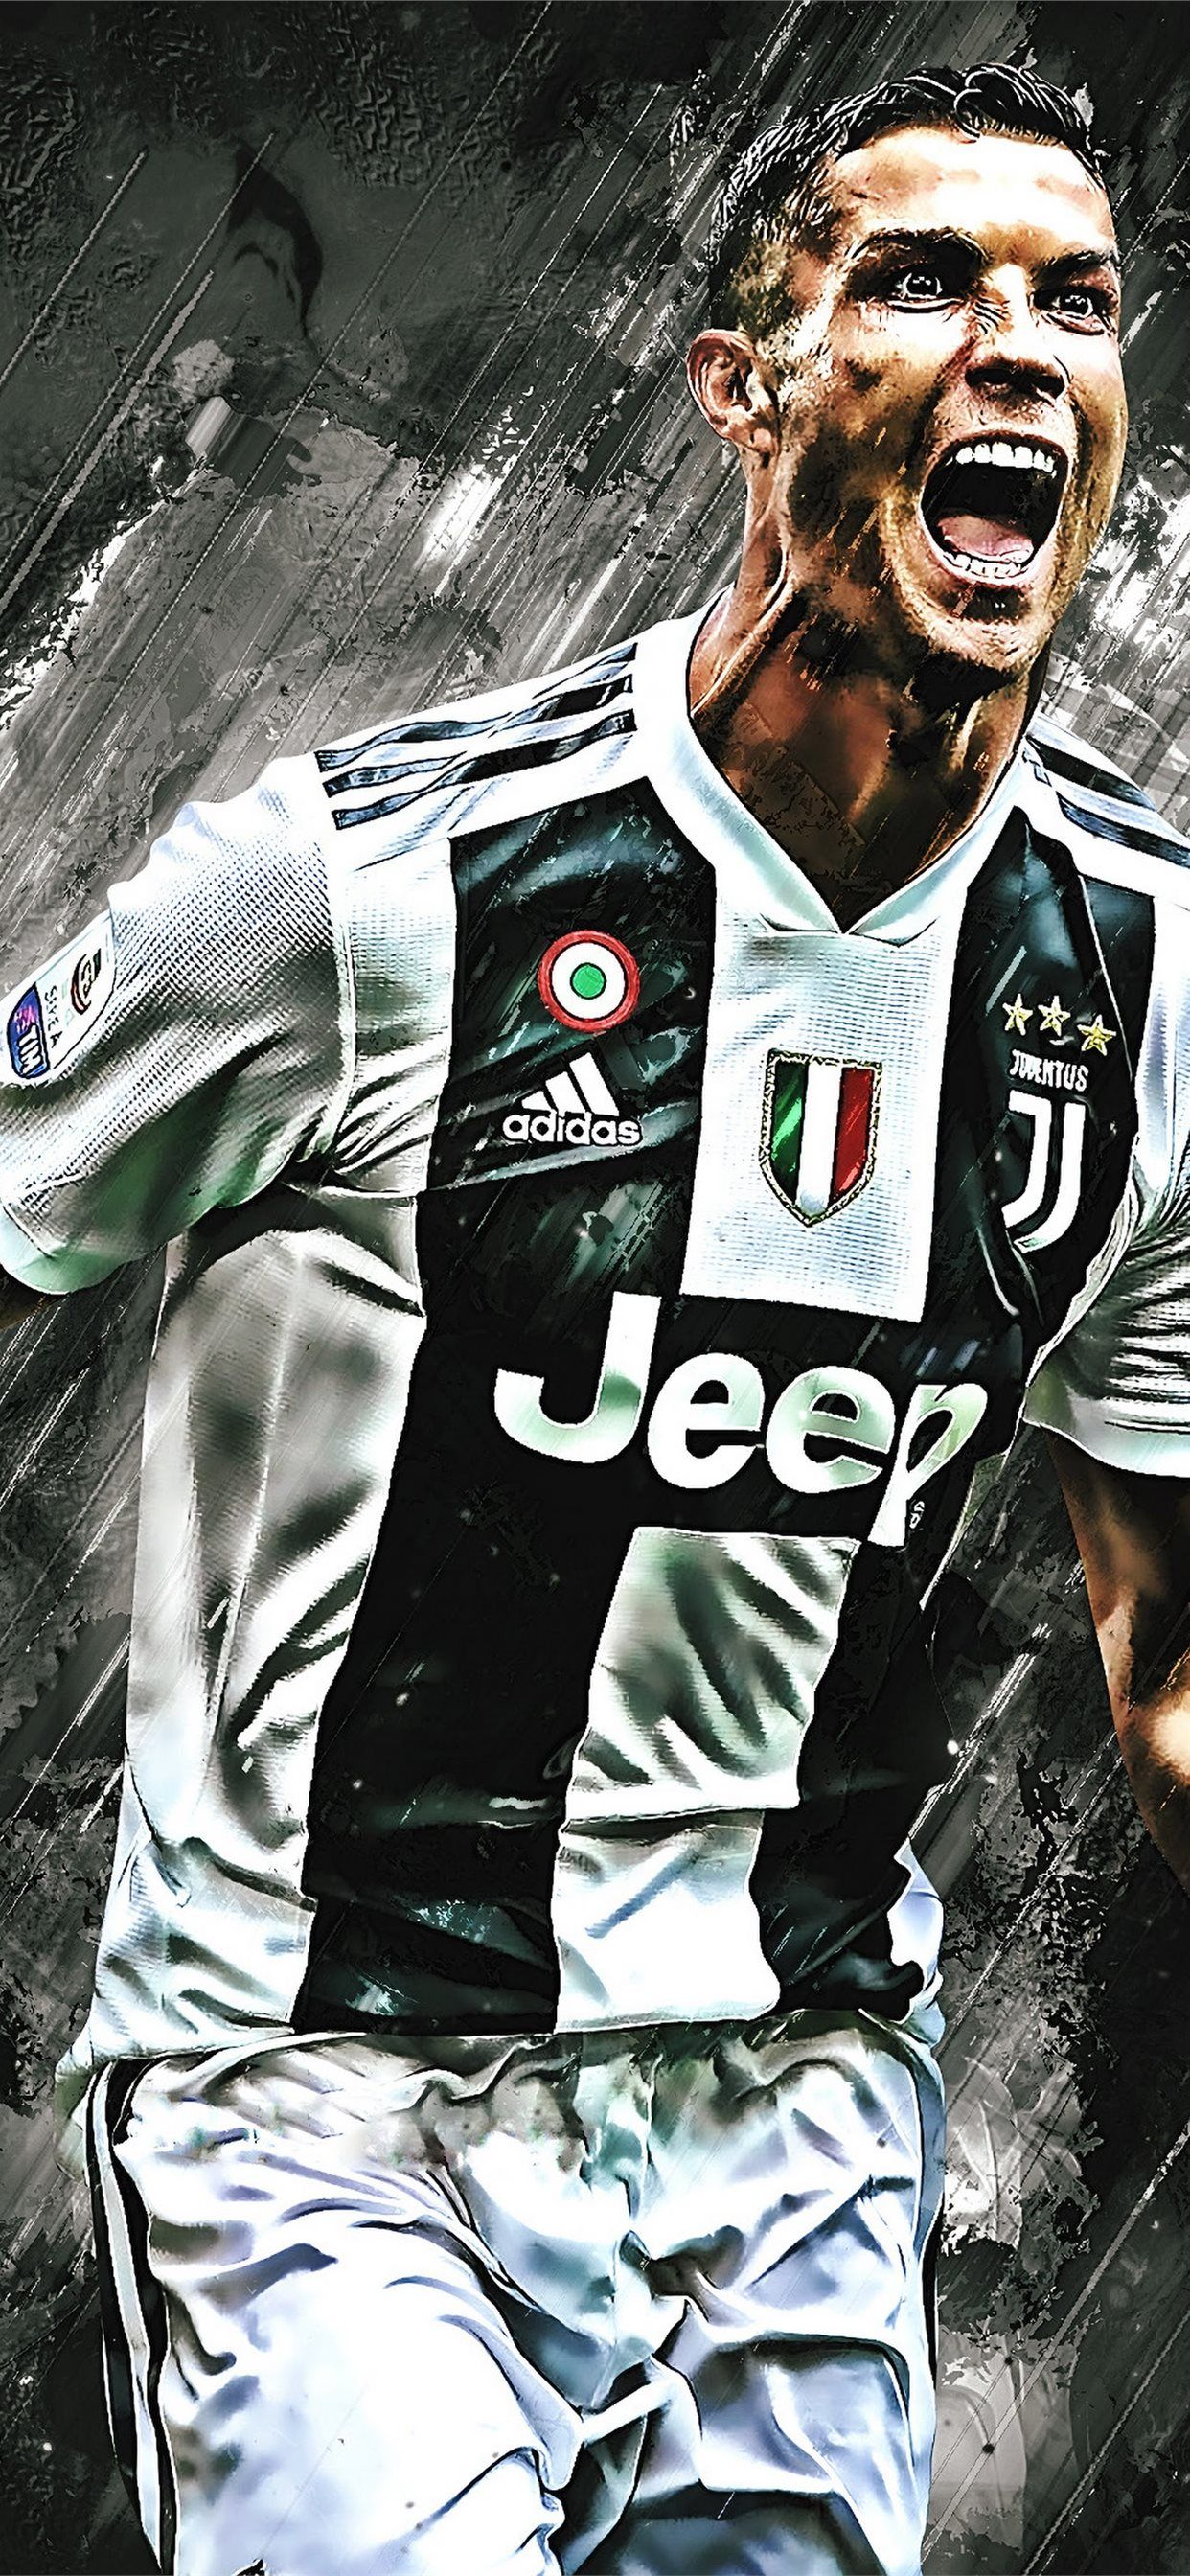 Cristiano Ronaldo Football Player 4K iPhone Wallpaper Free Download